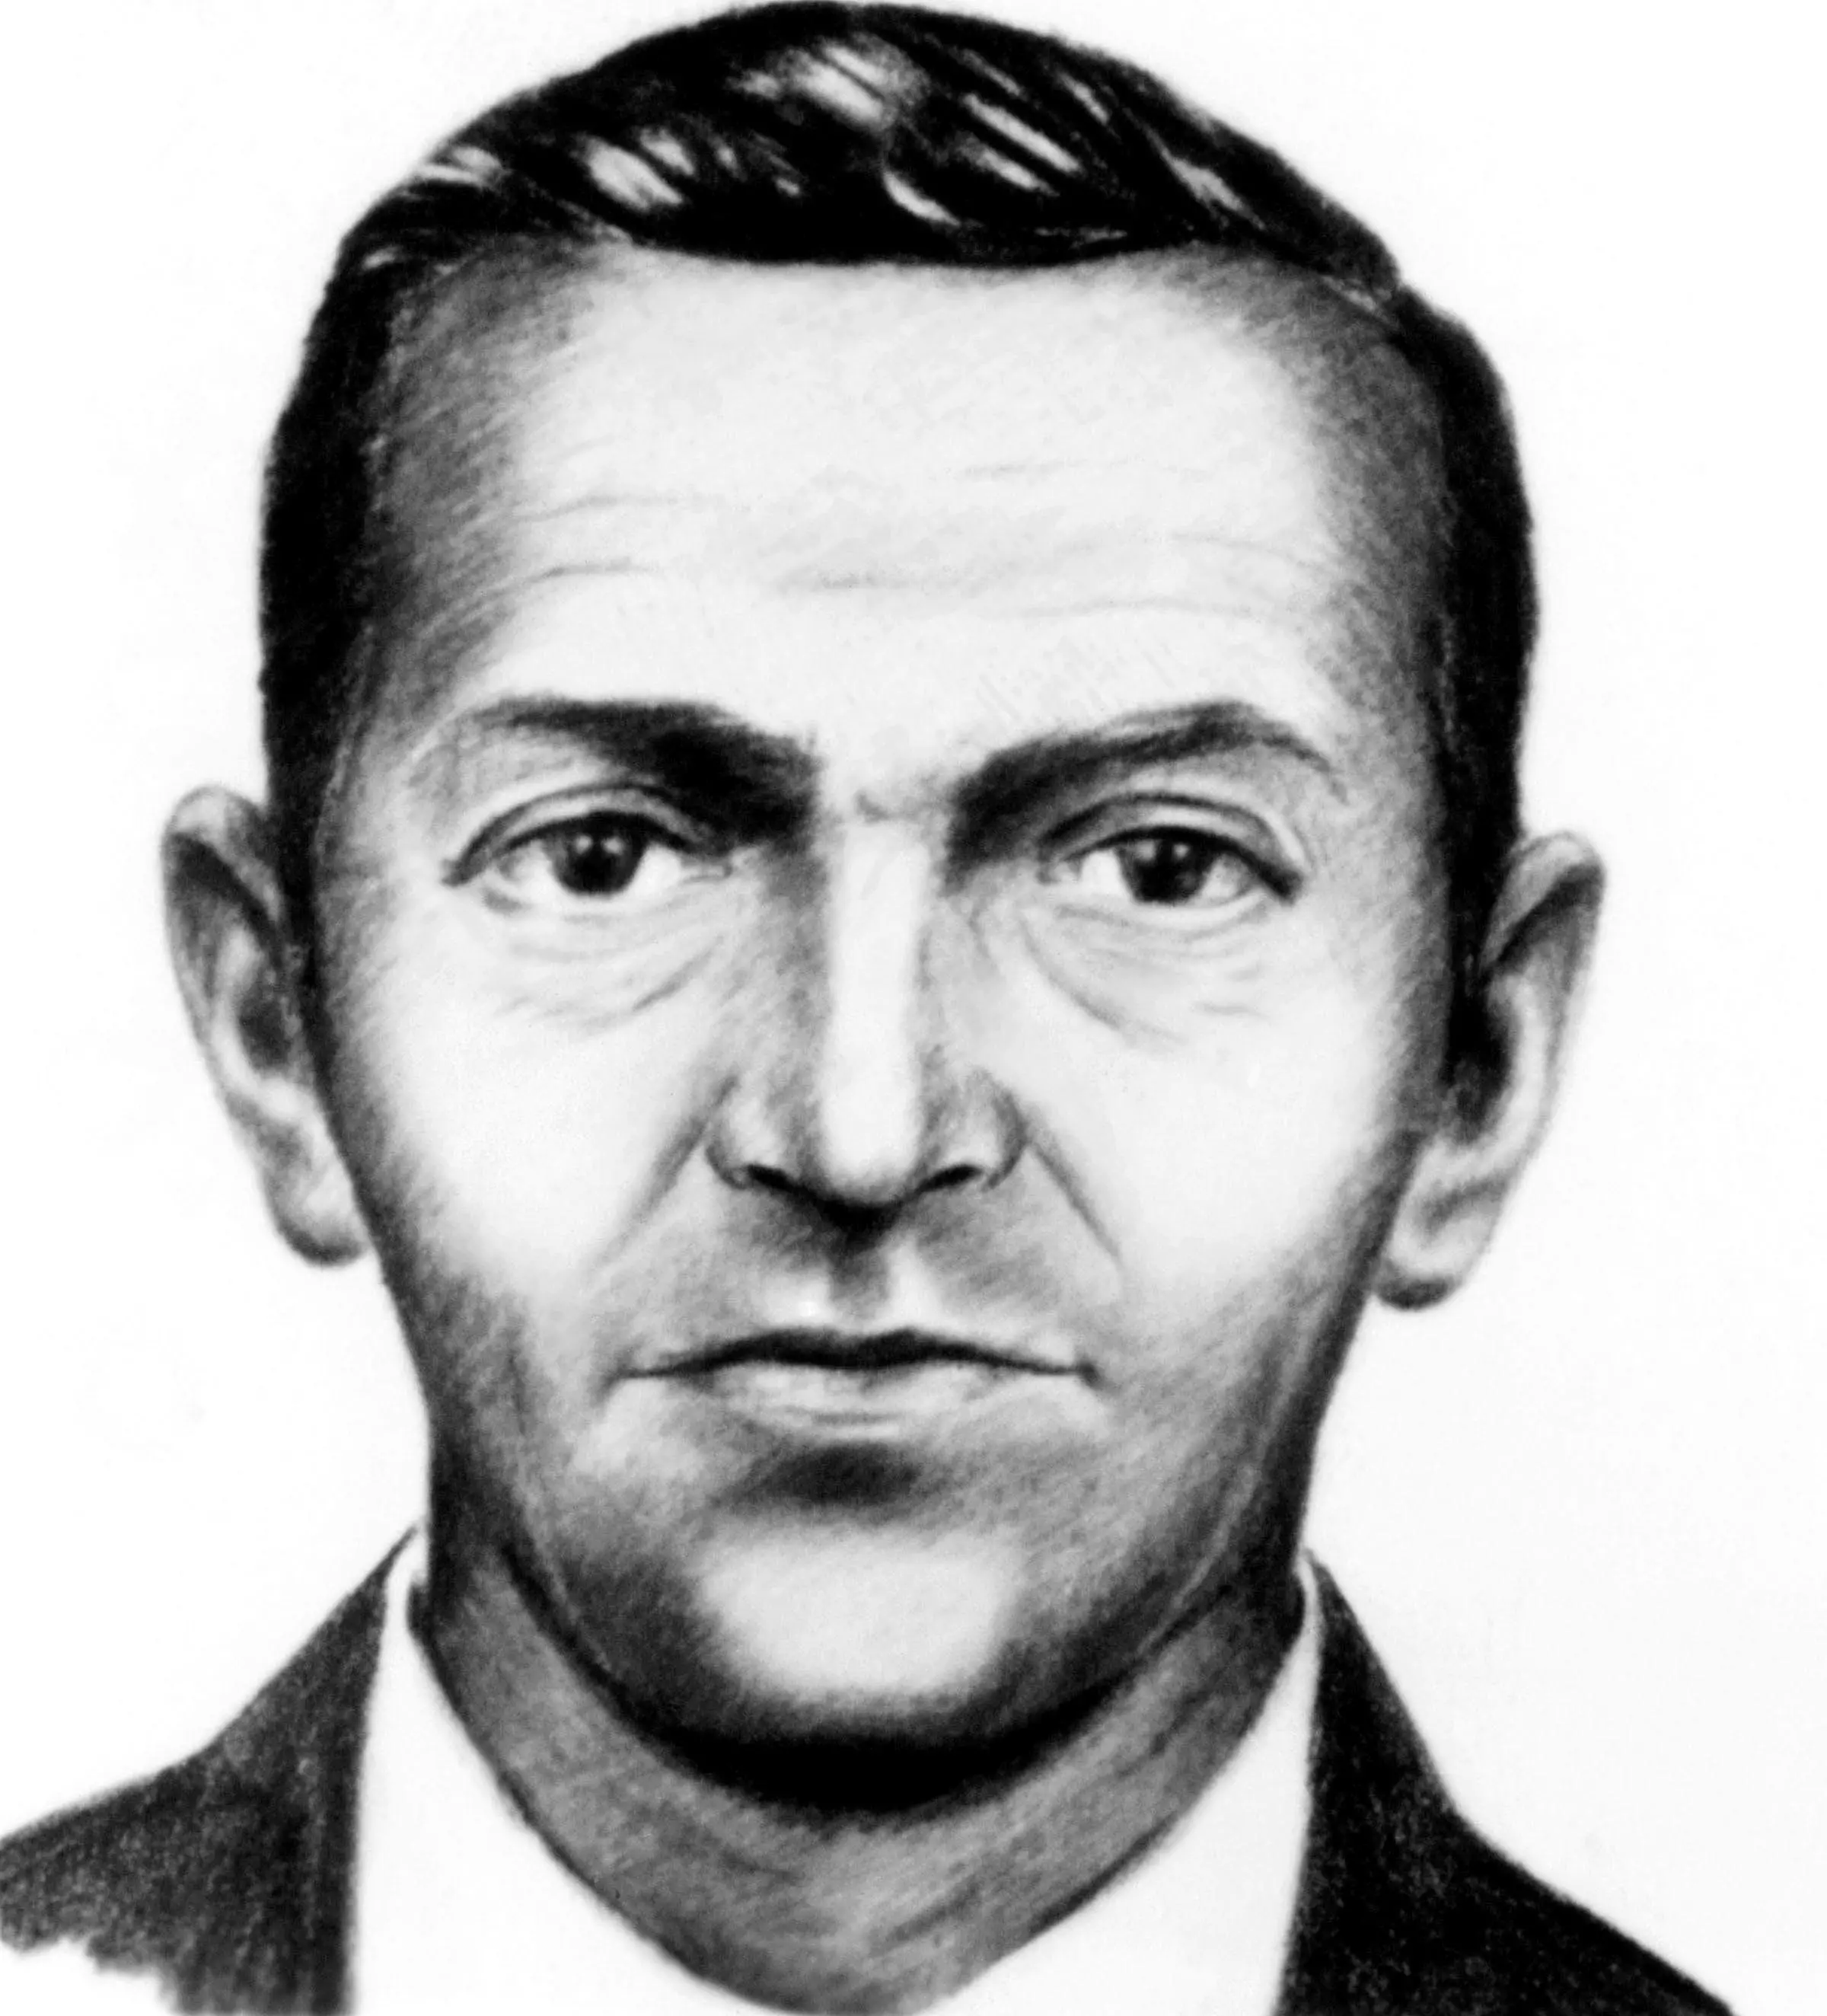 FBI composite of airplane hijacker D.B. Cooper.